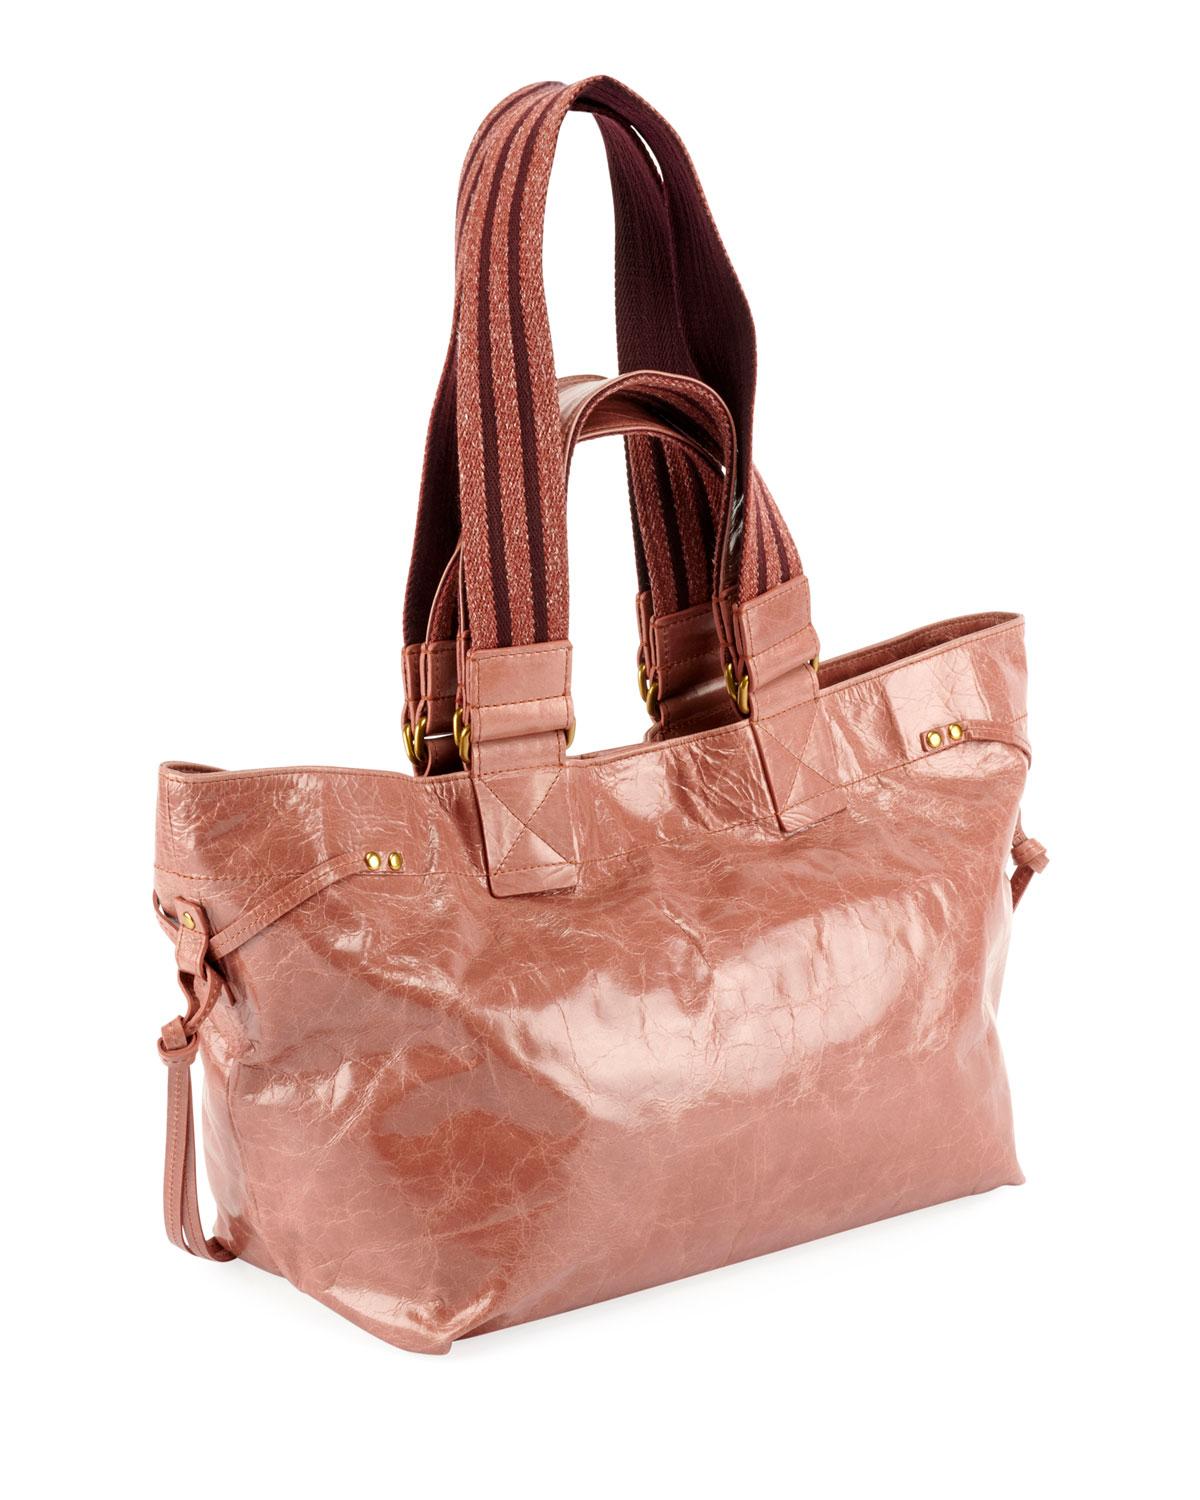 Isabel Marant Leather Bagya New Crackled Tote Bag in Pink - Lyst